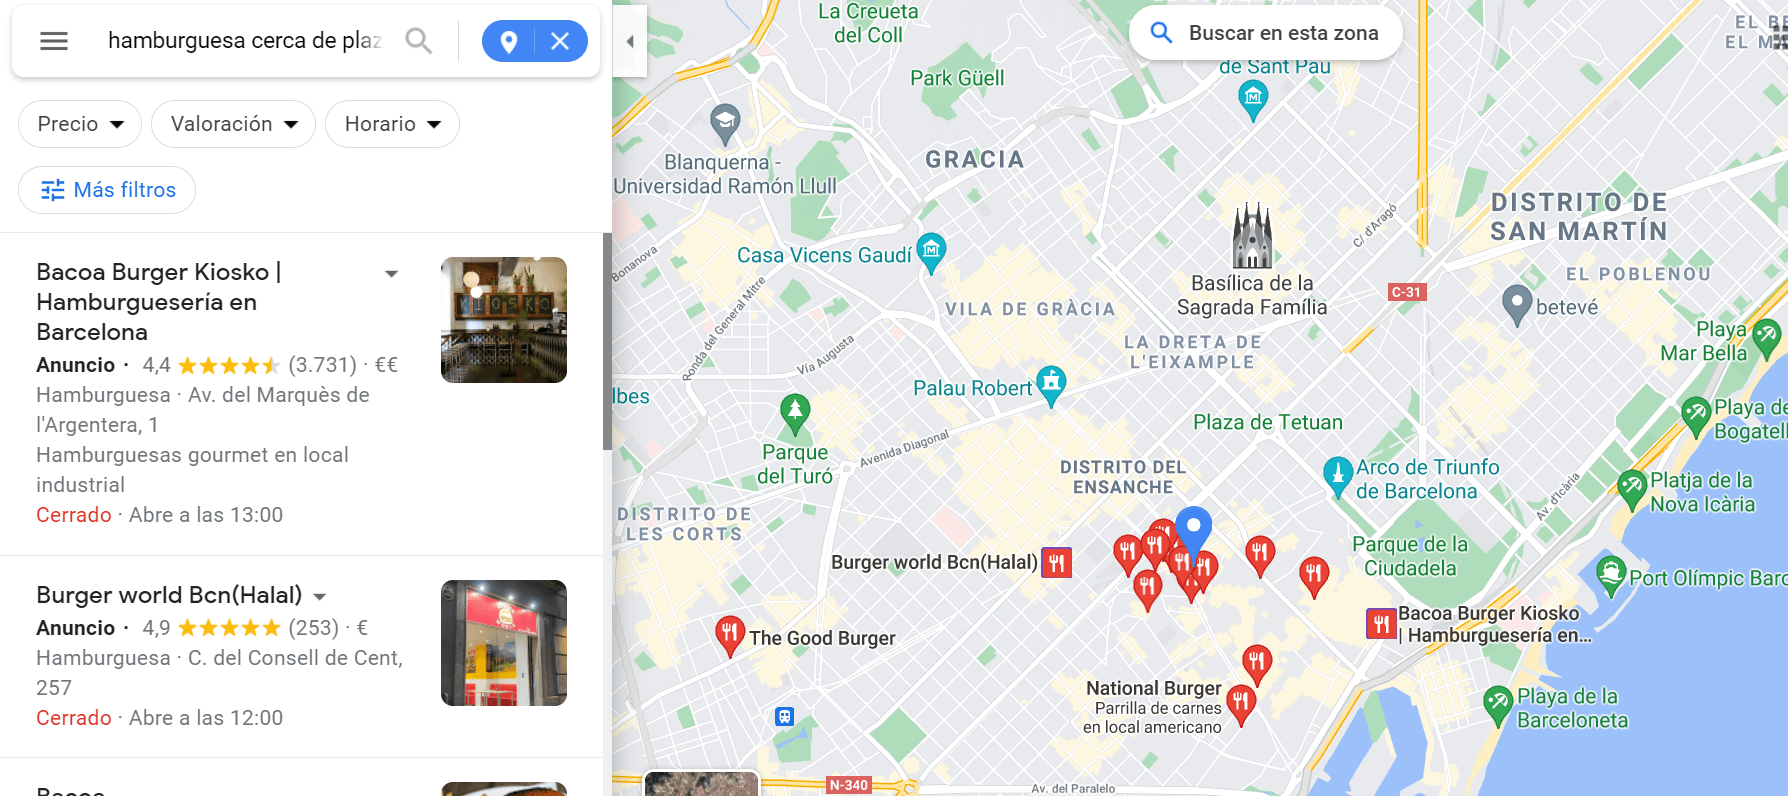 La página de resultados de Google Maps para el término “hamburguesa cerca de plaza catalunya”